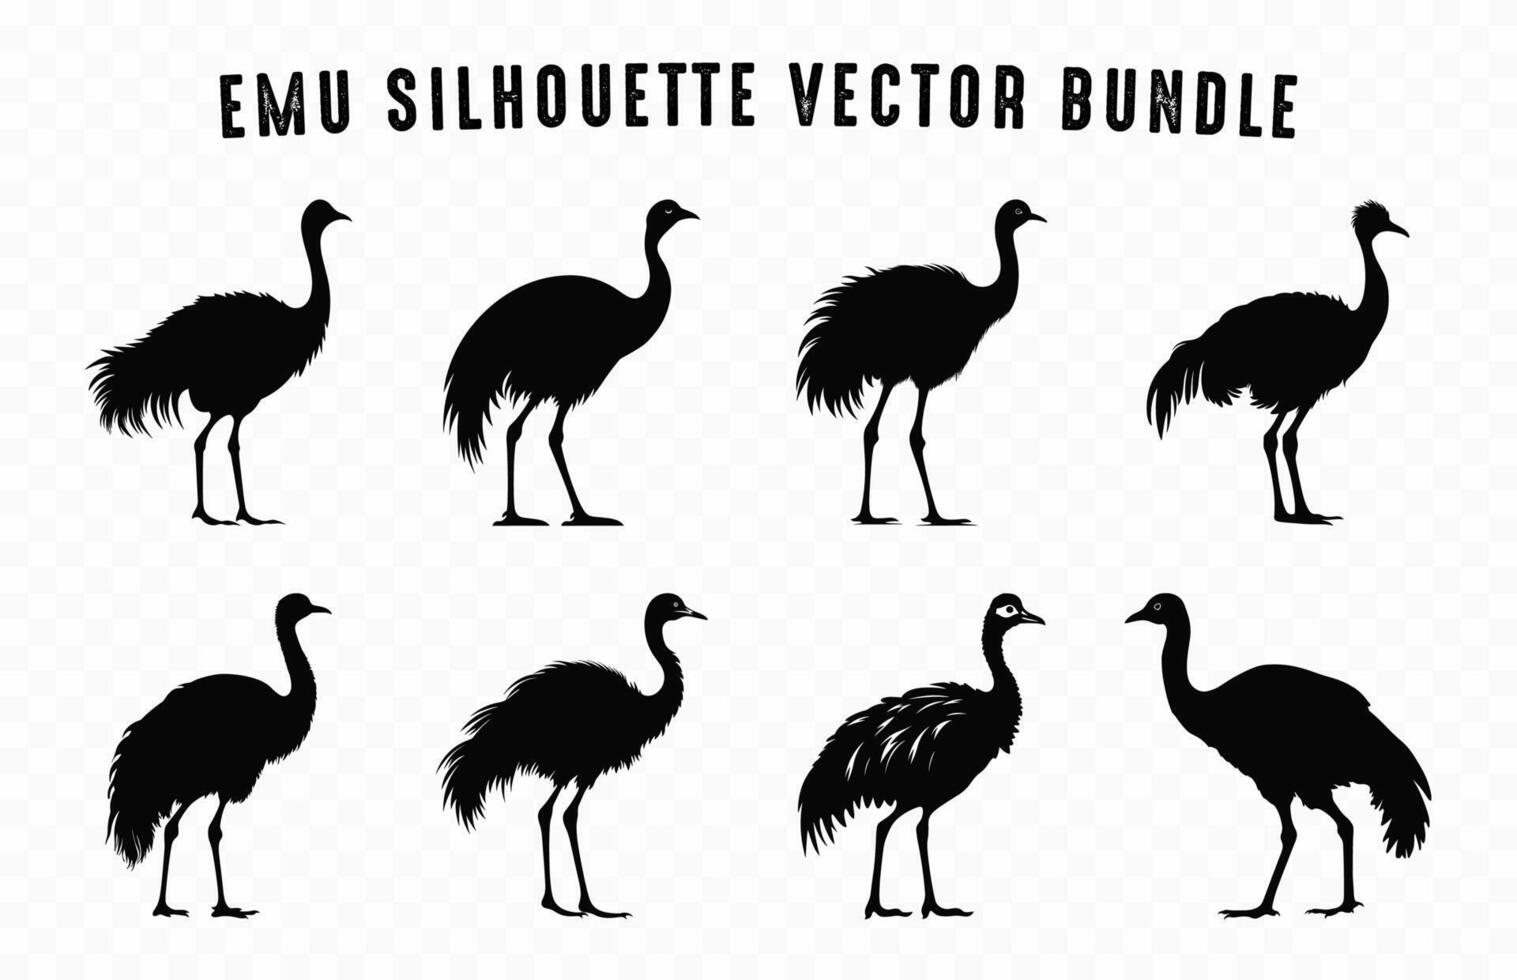 emú negro silueta manojo, avestruz emú siluetas colocar, australiano emú pájaro vector colección